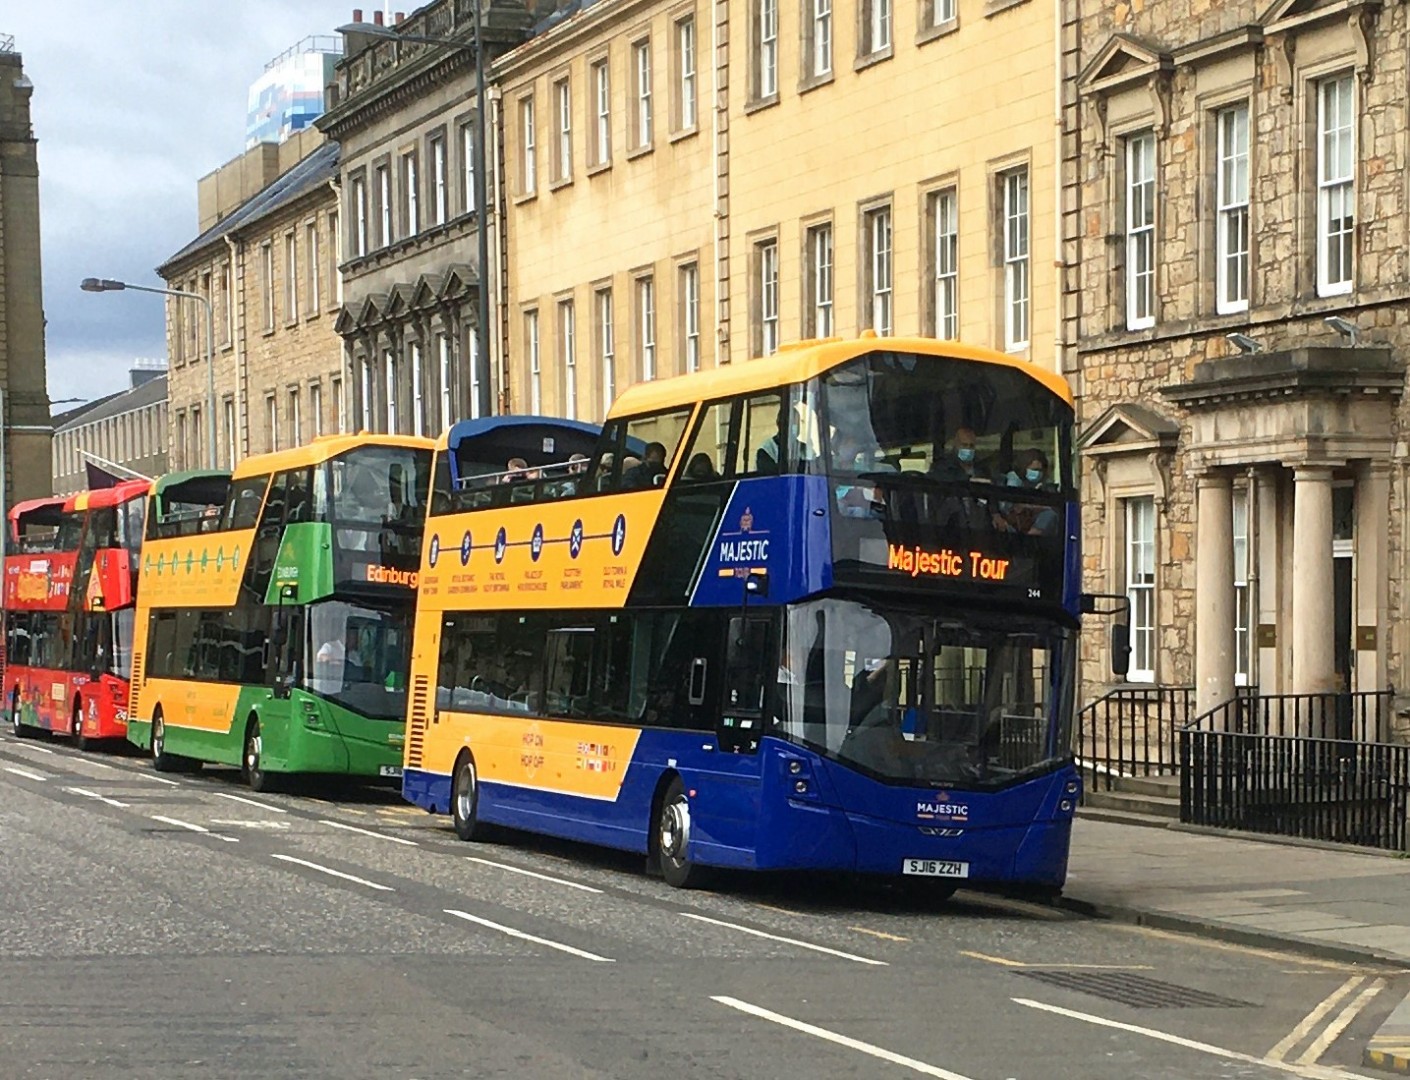 edinburgh tour bus stops